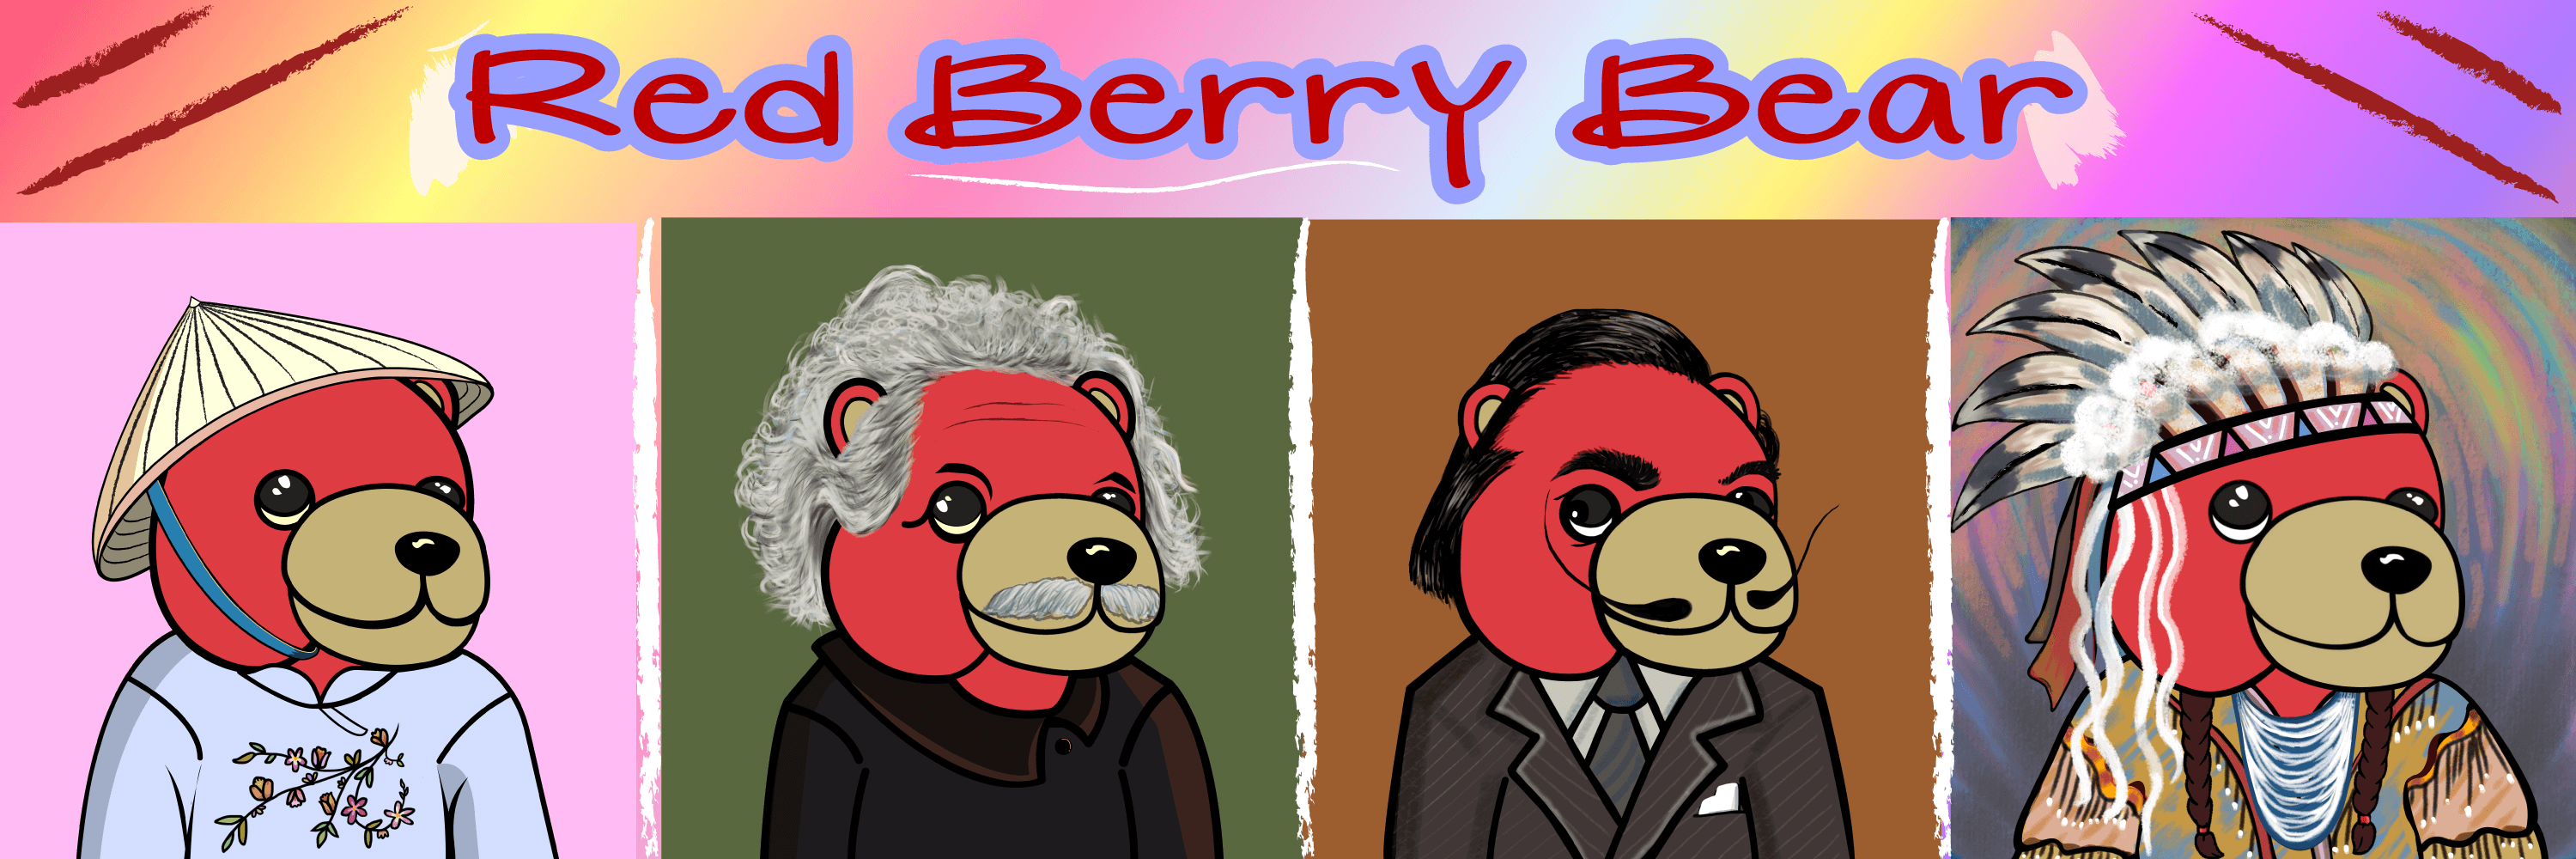 Red_Berry_Bear バナー